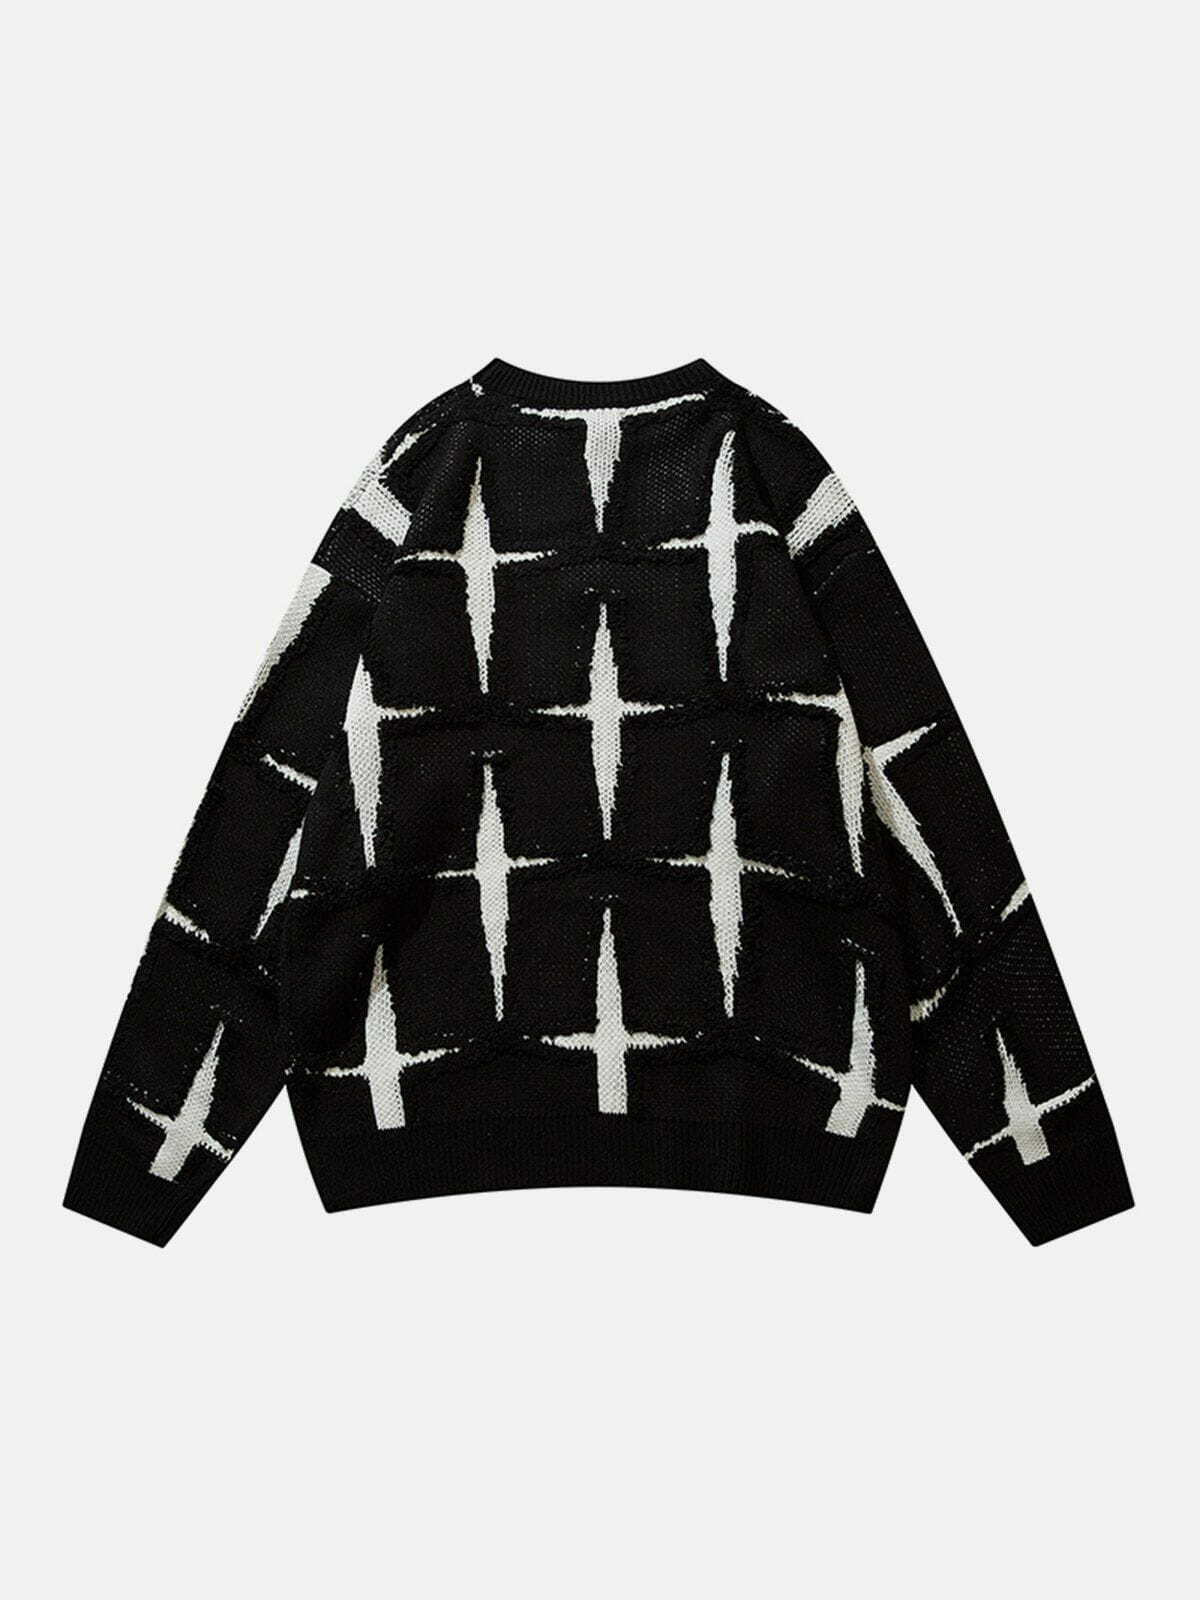 chic cross stitch sweater retro streetwear essential 6584